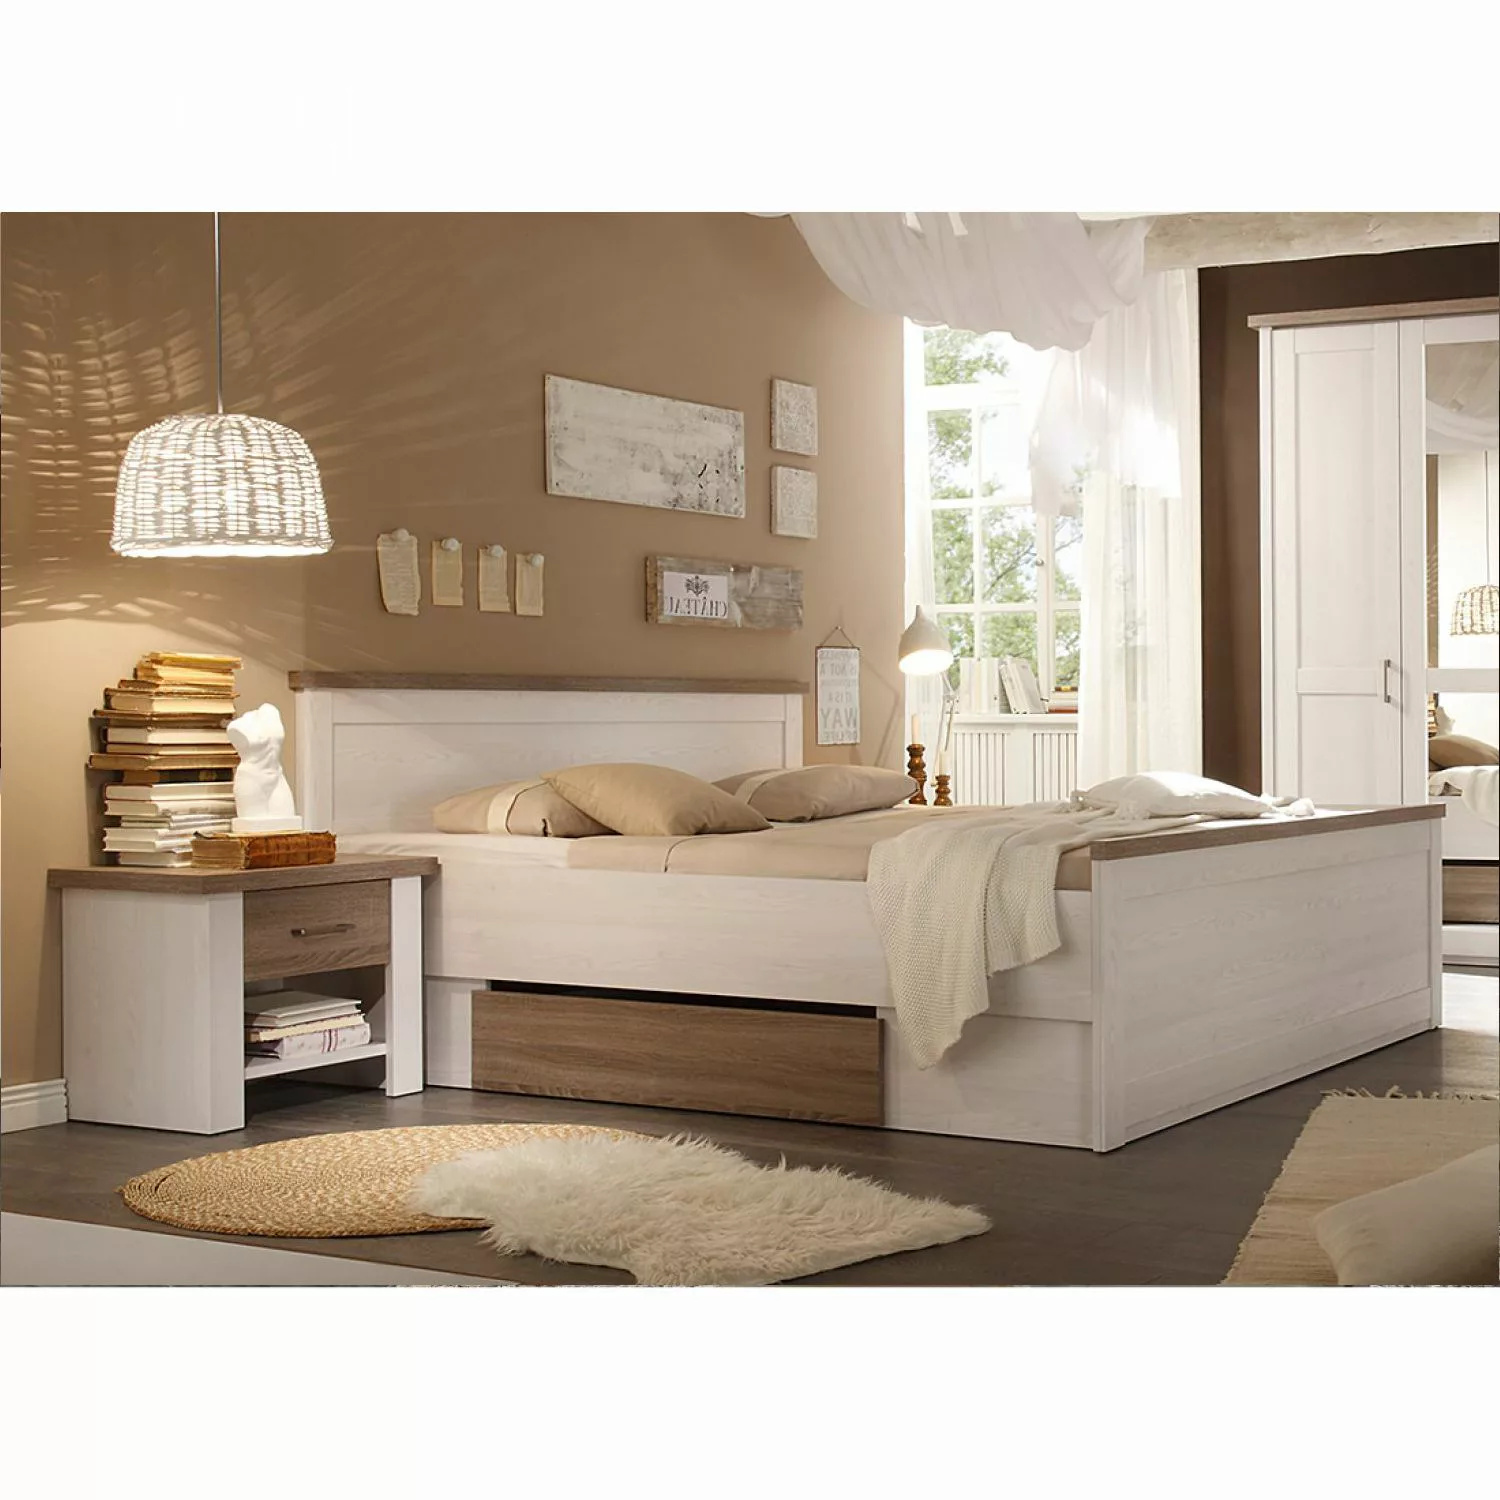 Pol-Power Bettgestell Bettanlage Doppelbett Bett Gästebett 180x200 cm inkl. günstig online kaufen